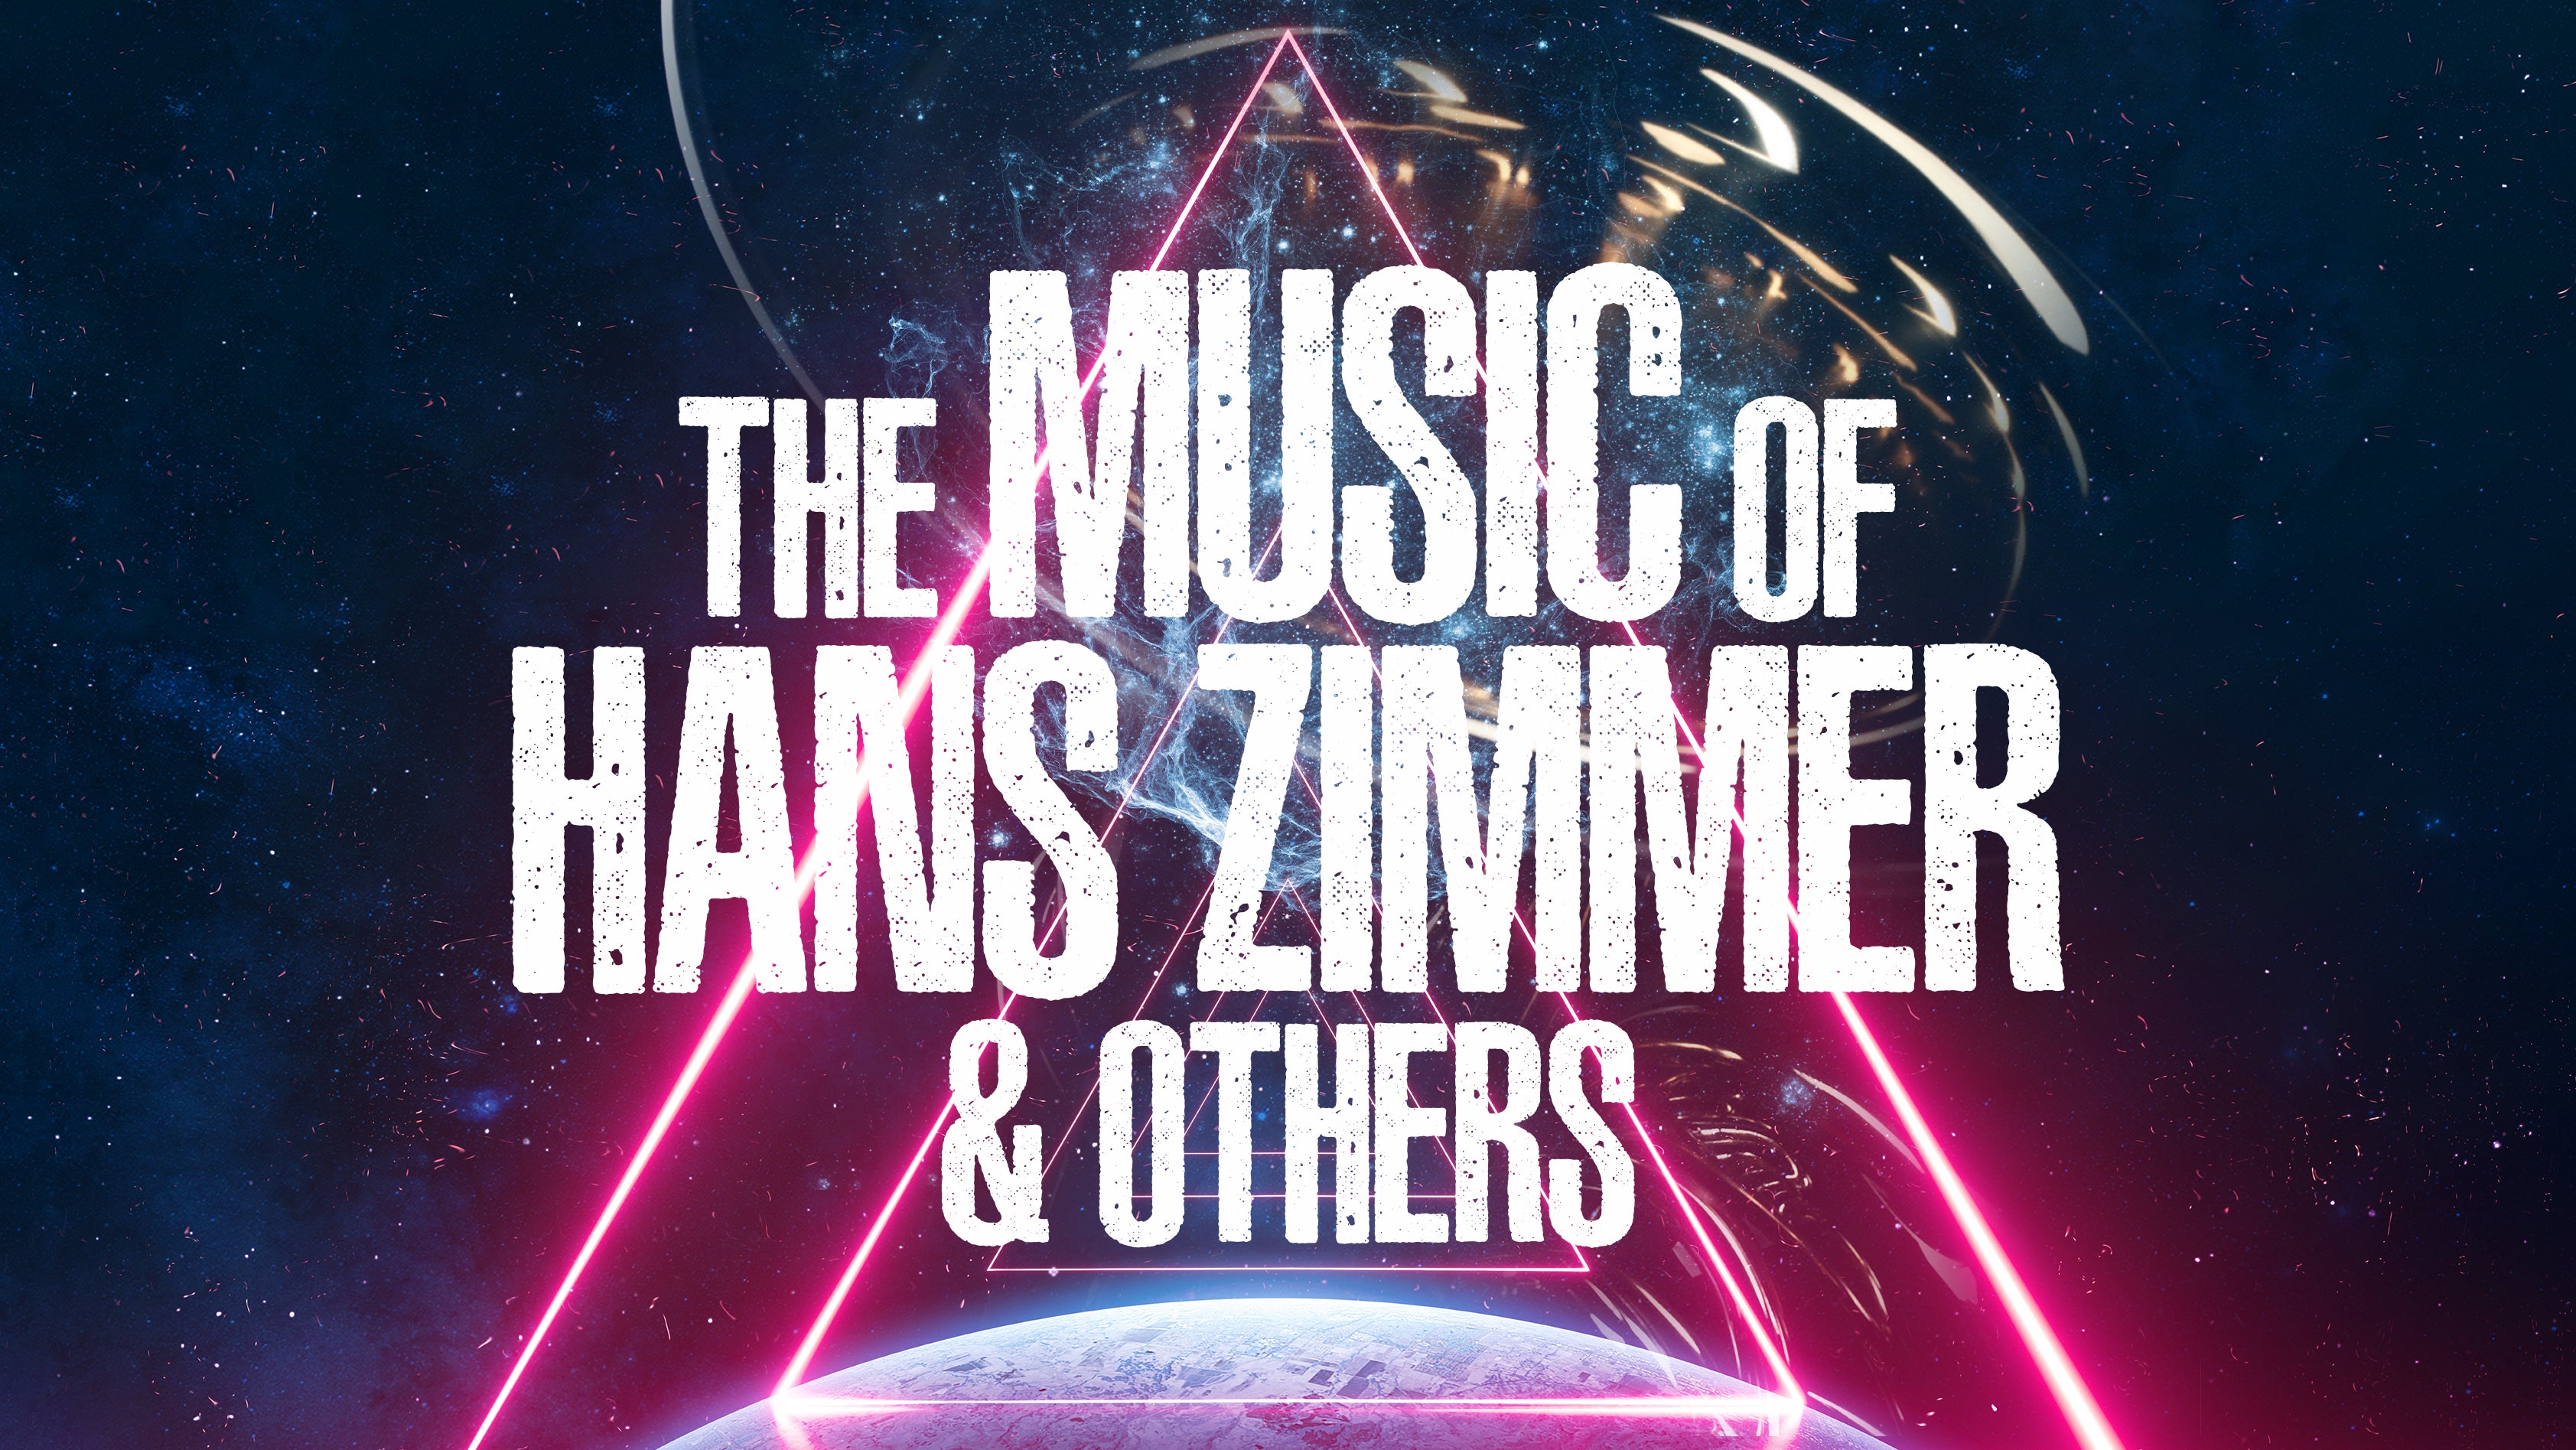 Hans Zimmer Live On Tour in Alpharetta promo photo for Live Nation presale offer code